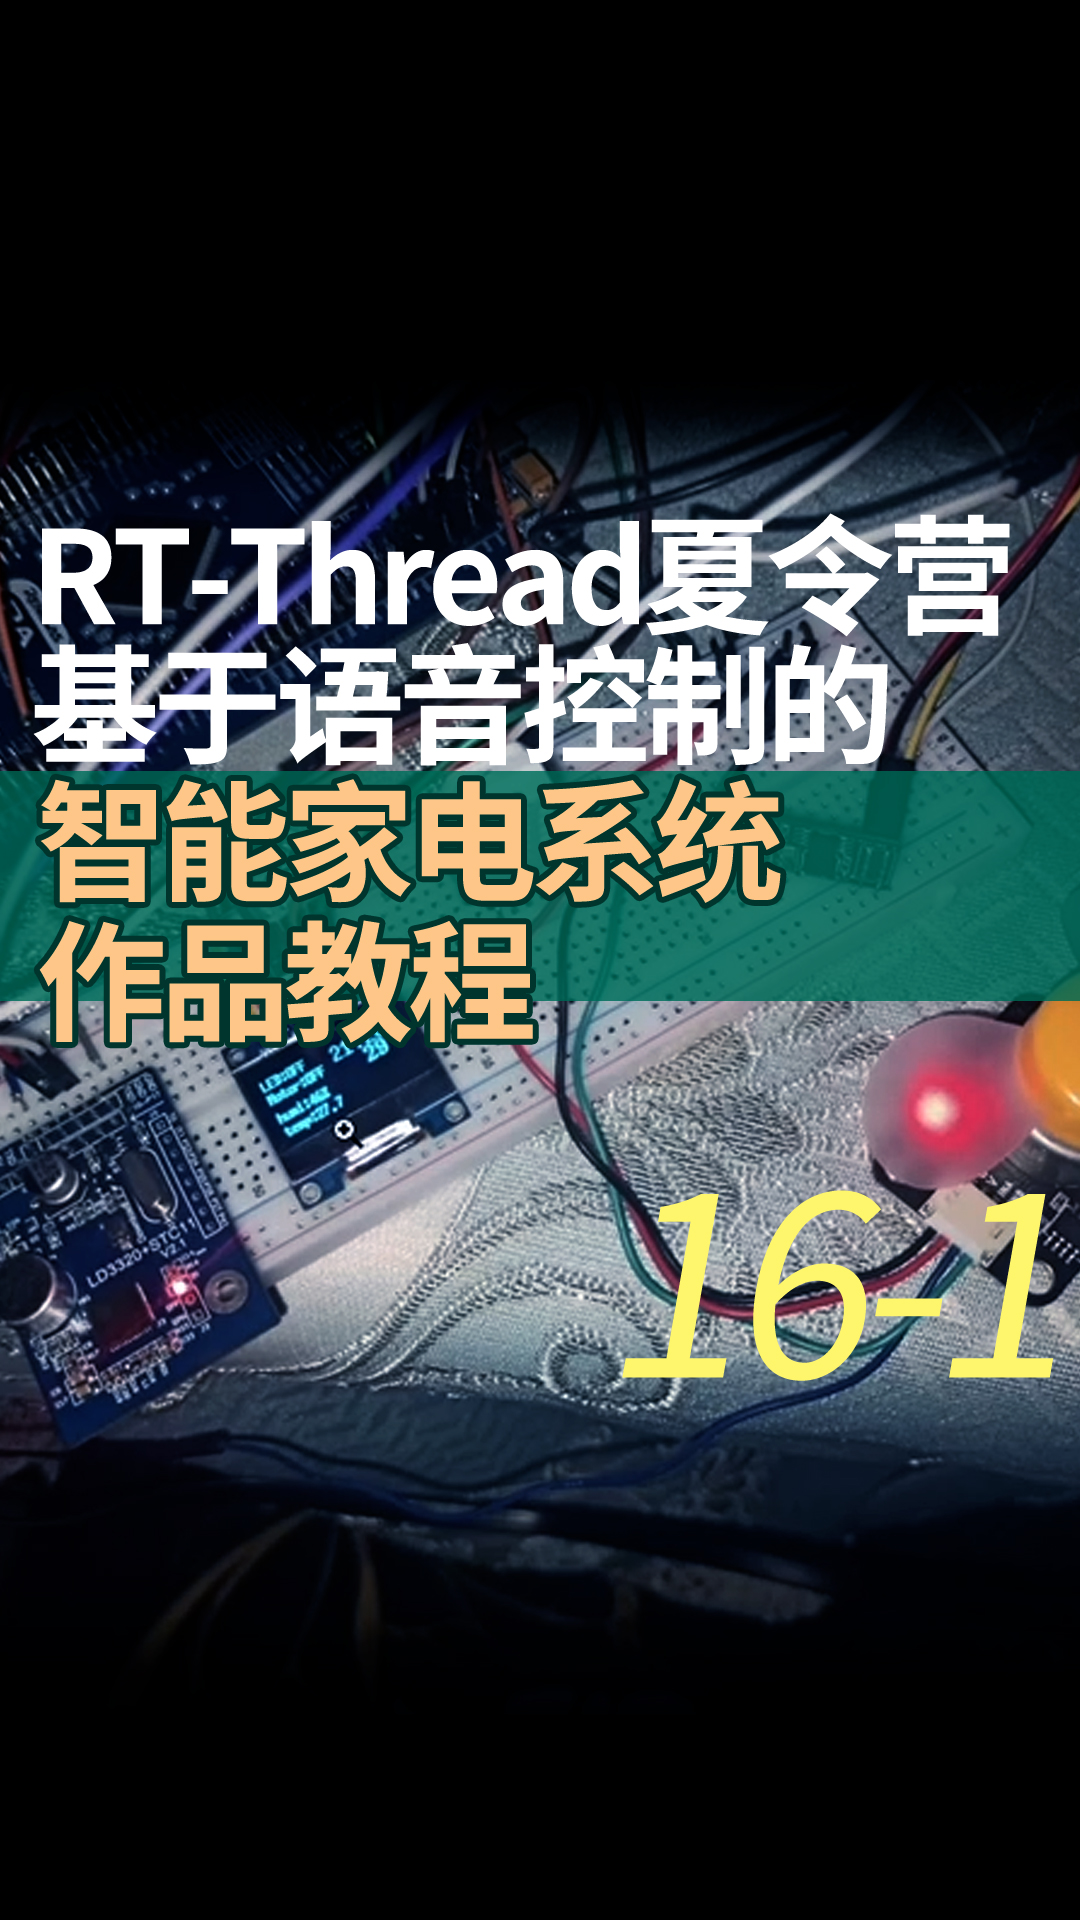 RT-Thread夏令营基于语音控制的智能家电系统作品教程16-1 网络对时